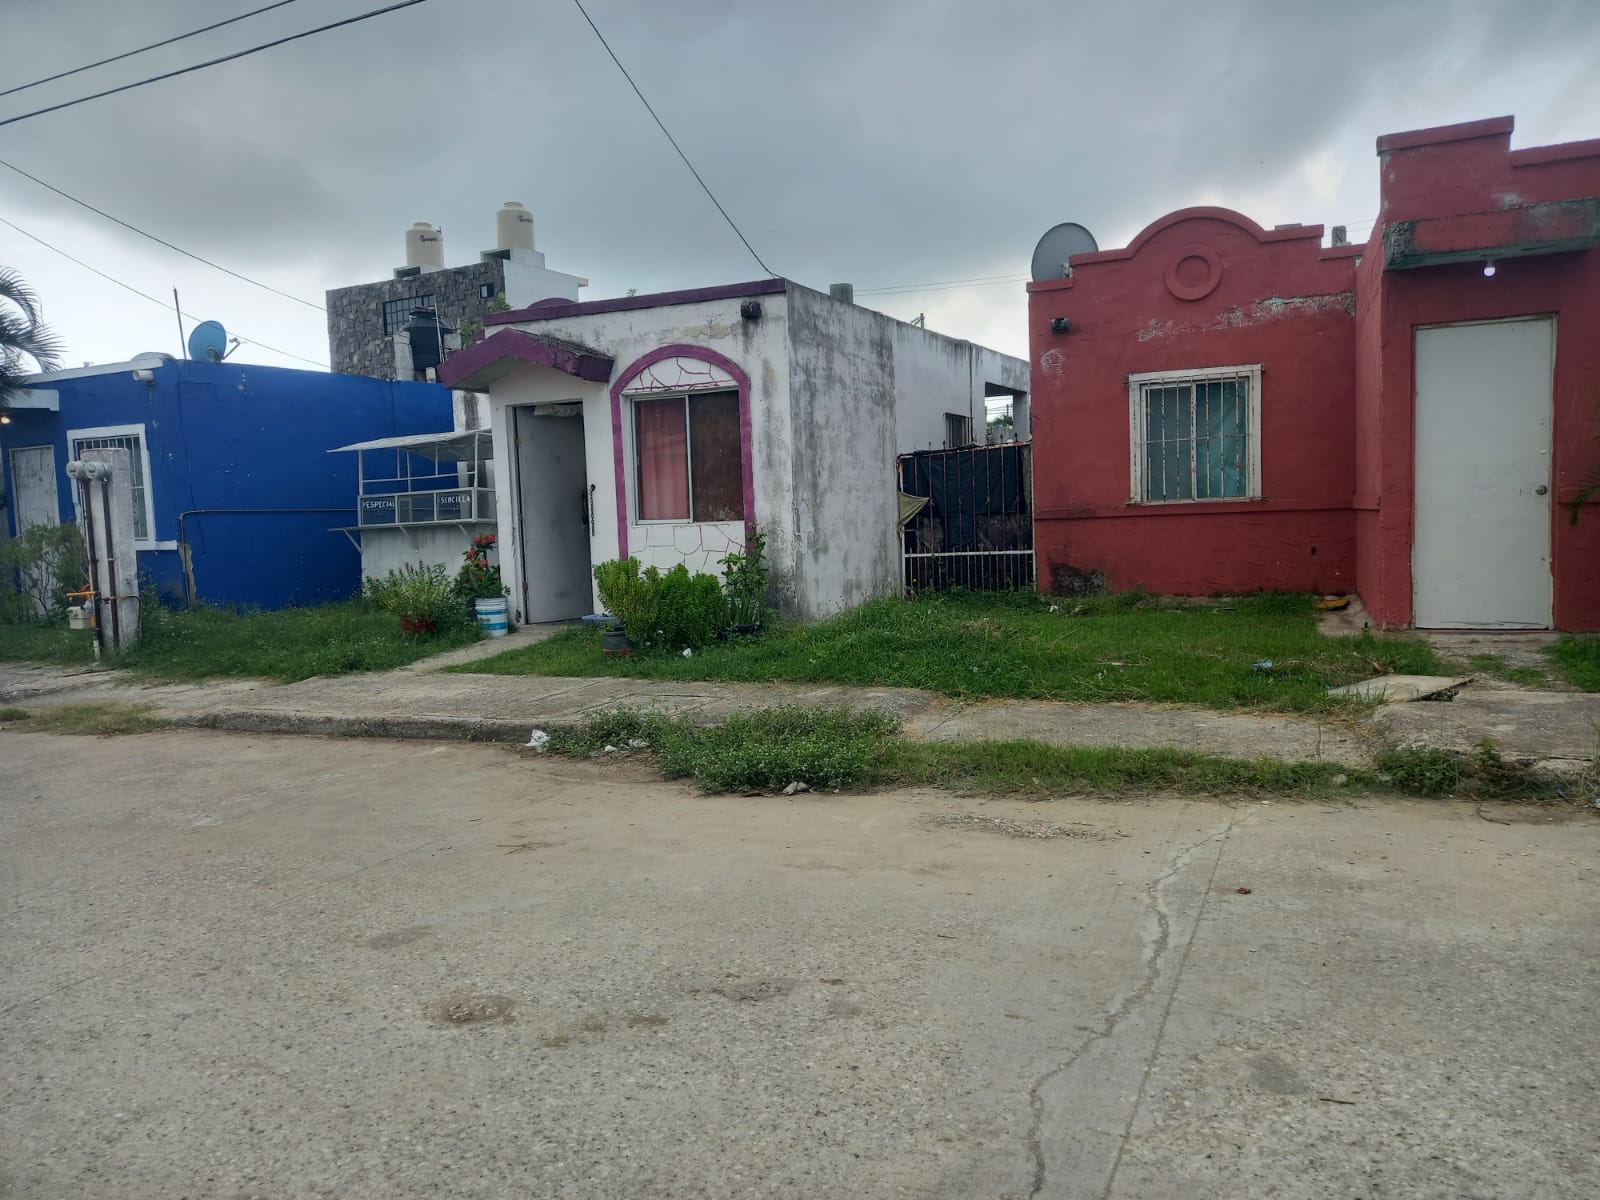 Photo of Preocupa a vecinos de Altamira aumento de casos de COVID-19